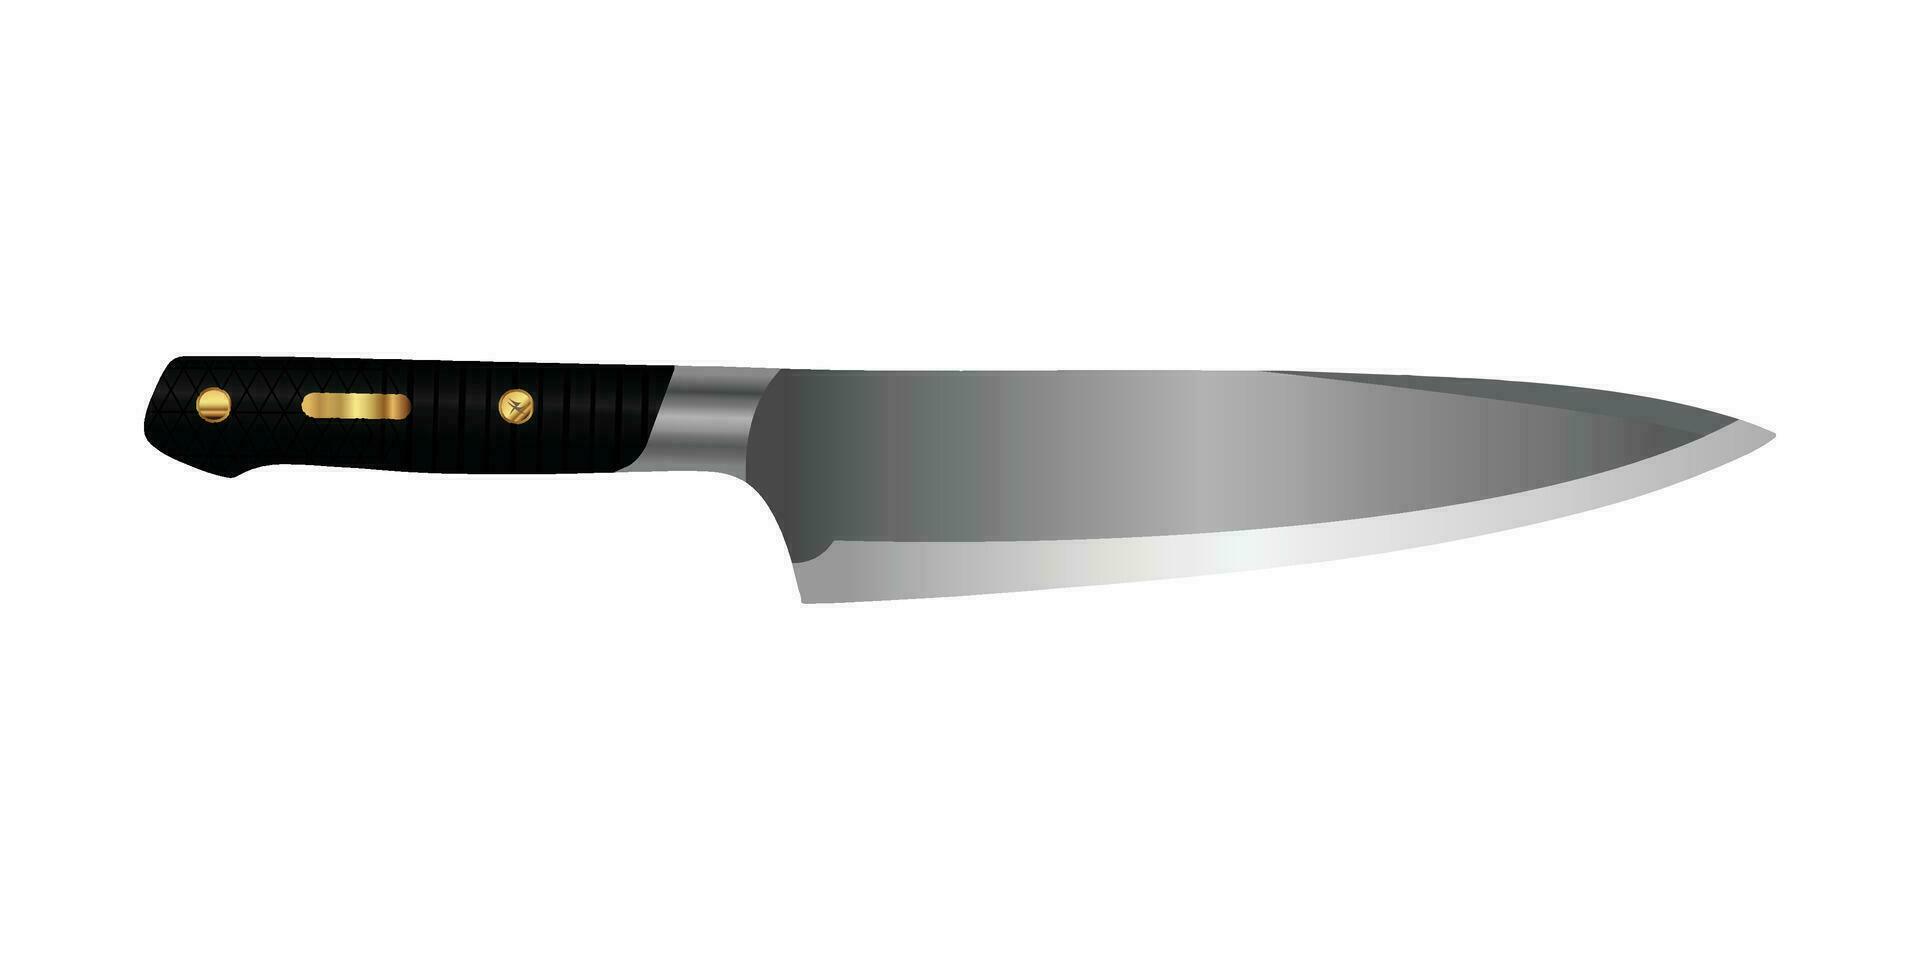 Chef kitchen knife realistic vector illustration